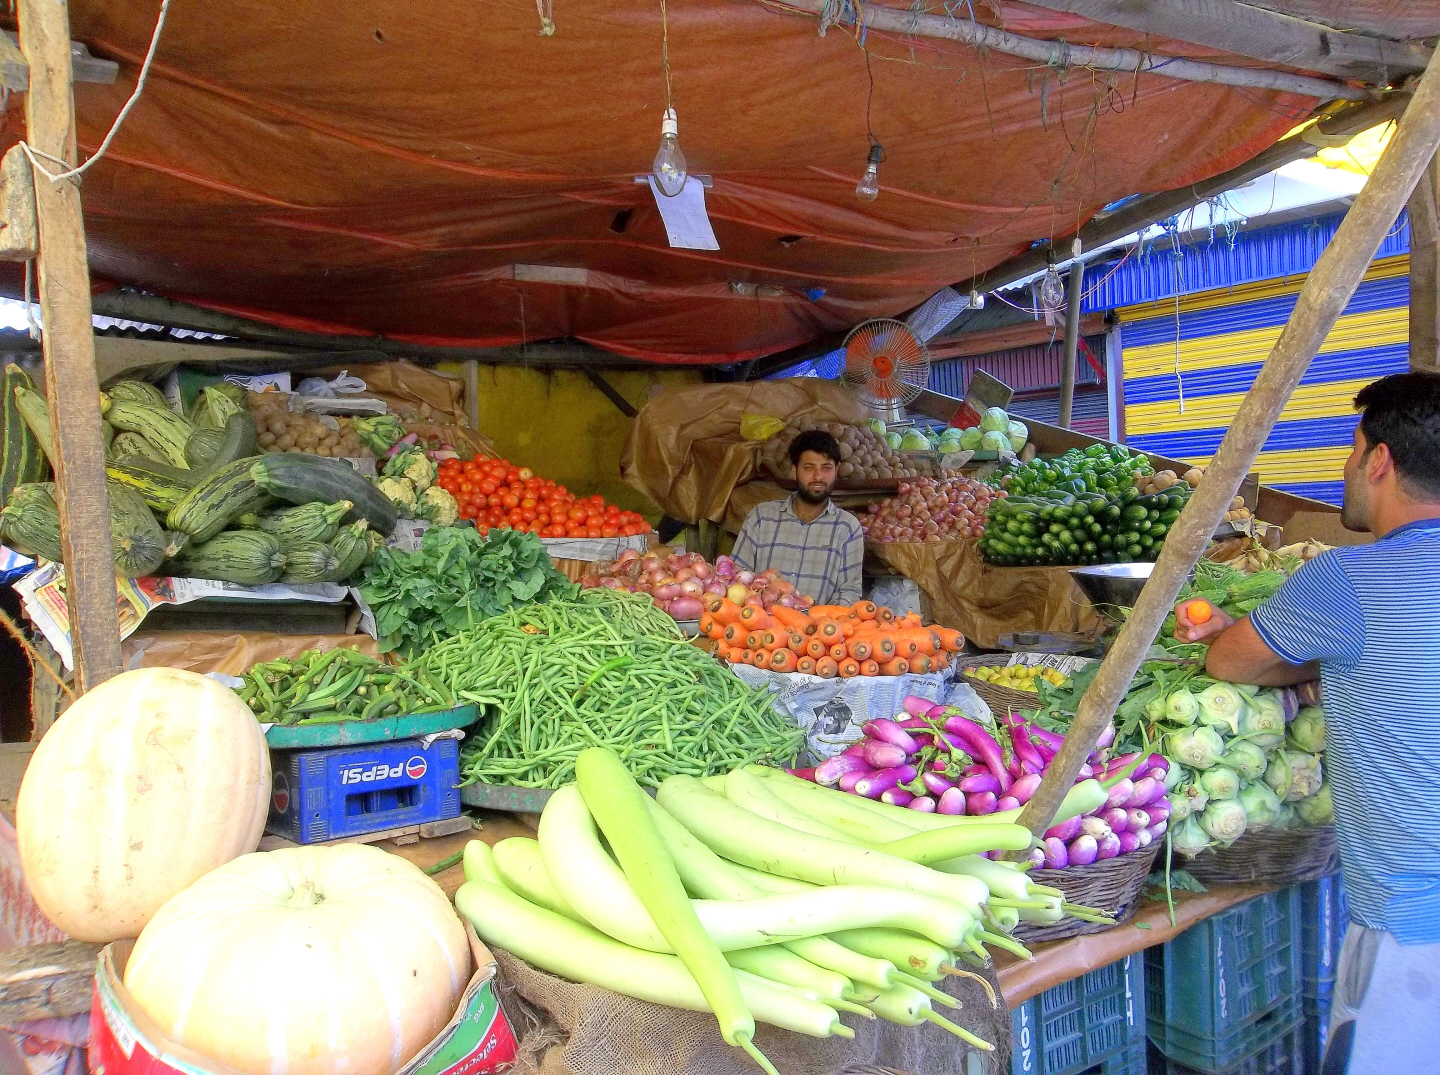 Produce Stall near Hazrat Bal Mosque - Srinagar, Kashmir